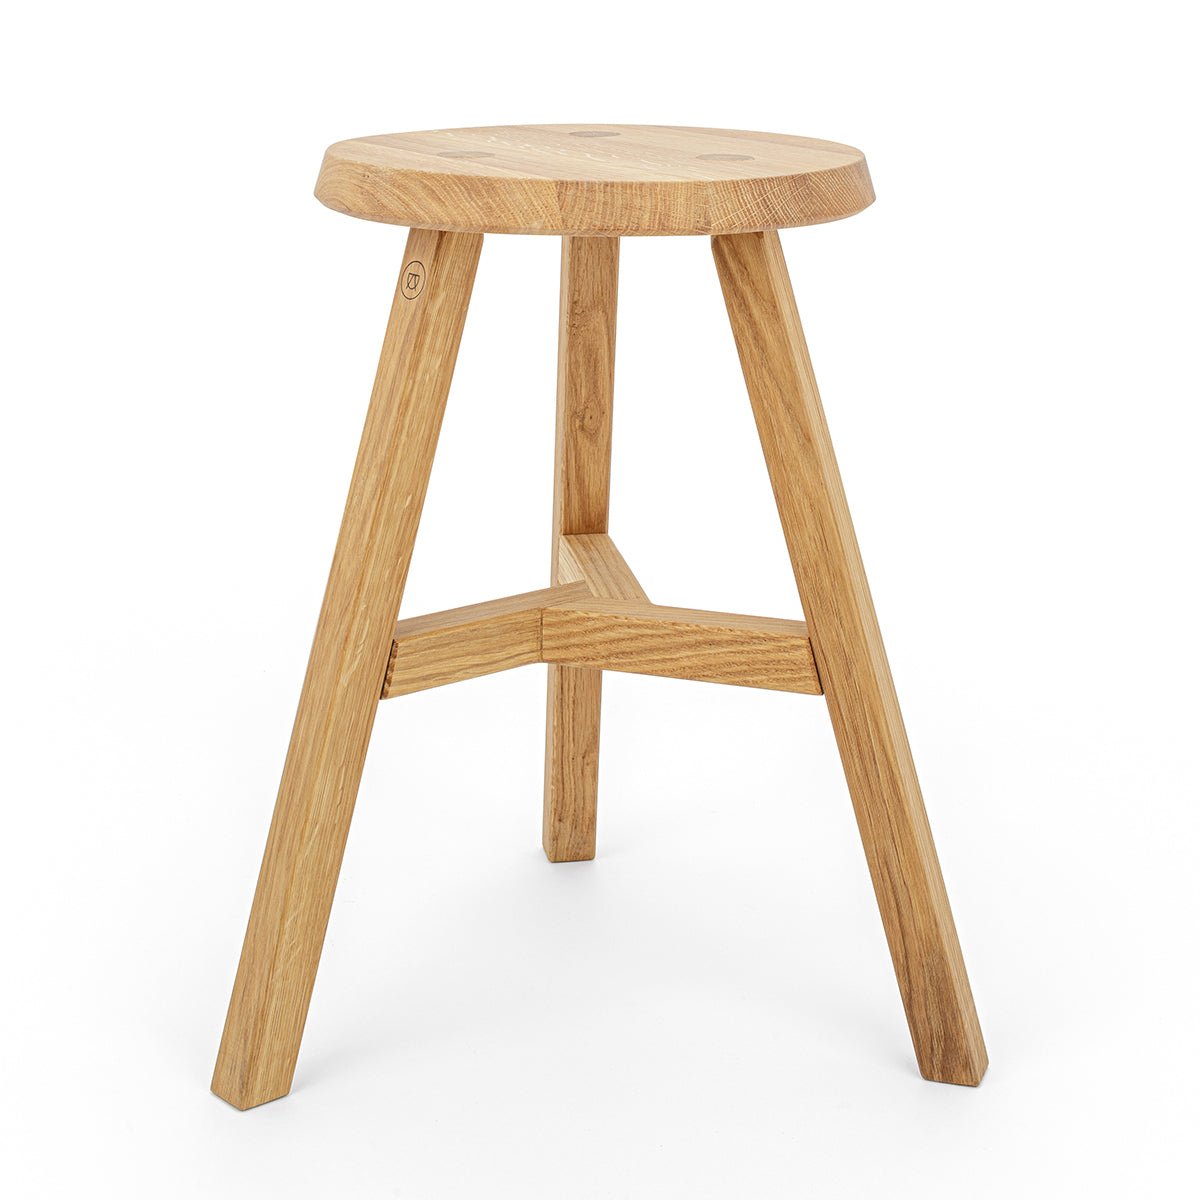 Elegant “Lia” stool made of oak wood with a honey look